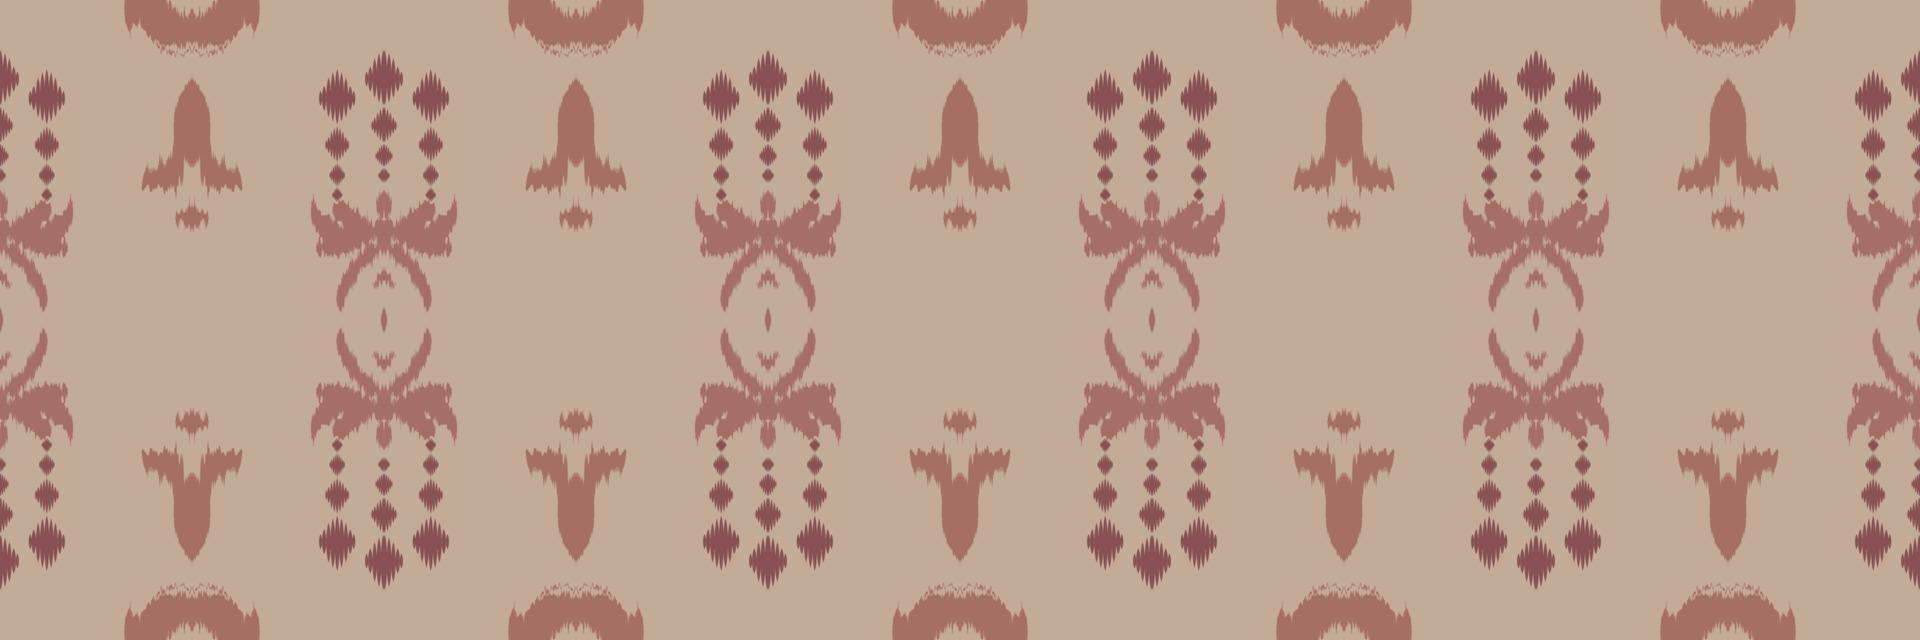 motiv afrikanisch ikat batik textil nahtloses muster digitales vektordesign für druck saree kurti borneo stoff grenze pinsel symbole muster baumwolle vektor